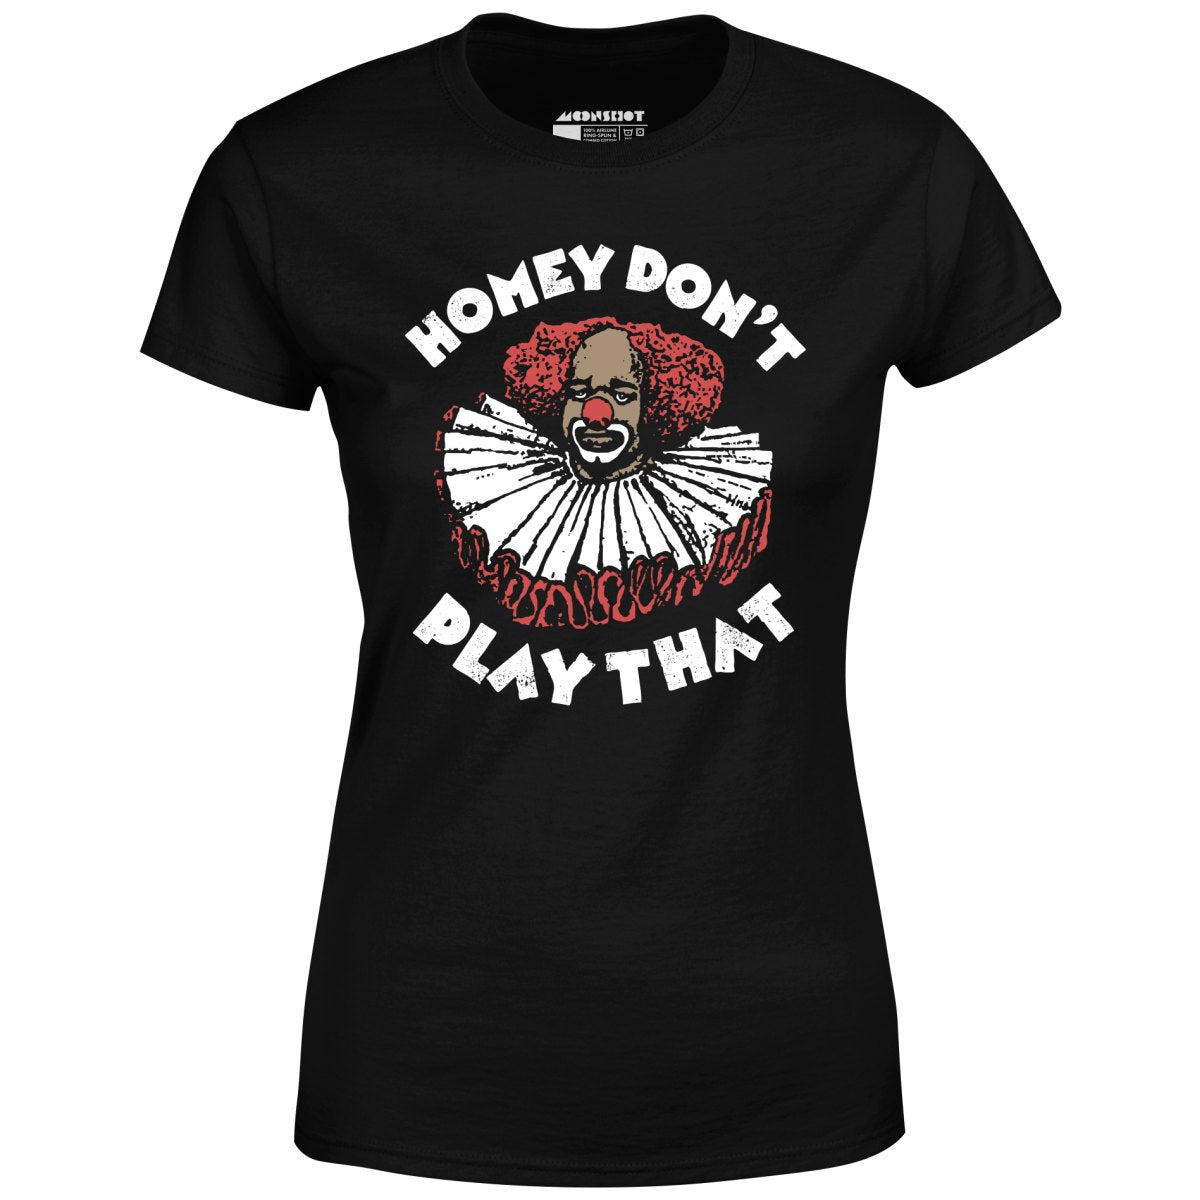 Homey Don't Play That - Women's T-Shirt